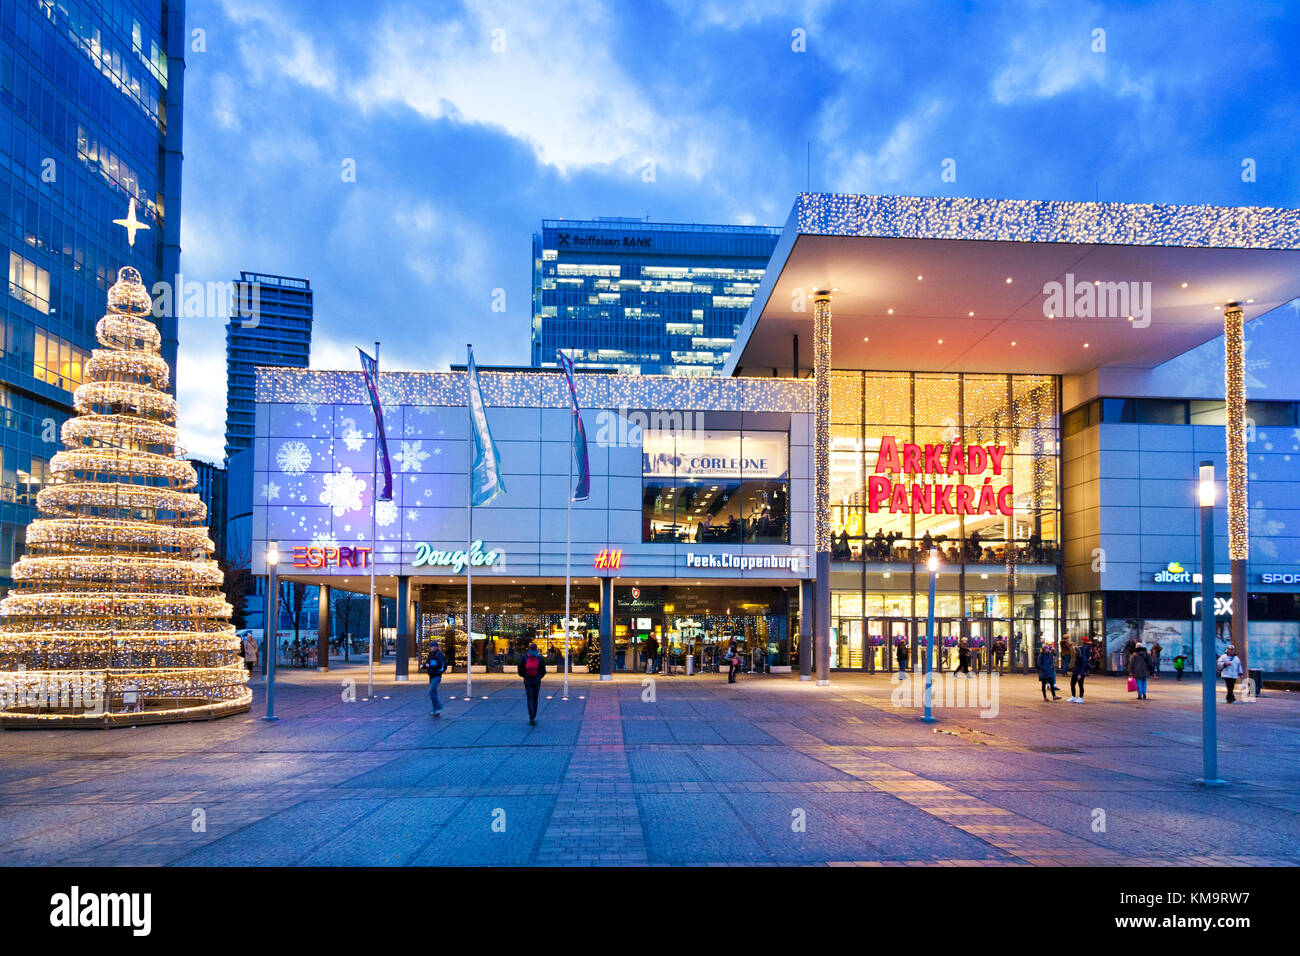 Christmas, Shopping centrum Arkady Pankrac, Pankrac distric Stock Photo -  Alamy